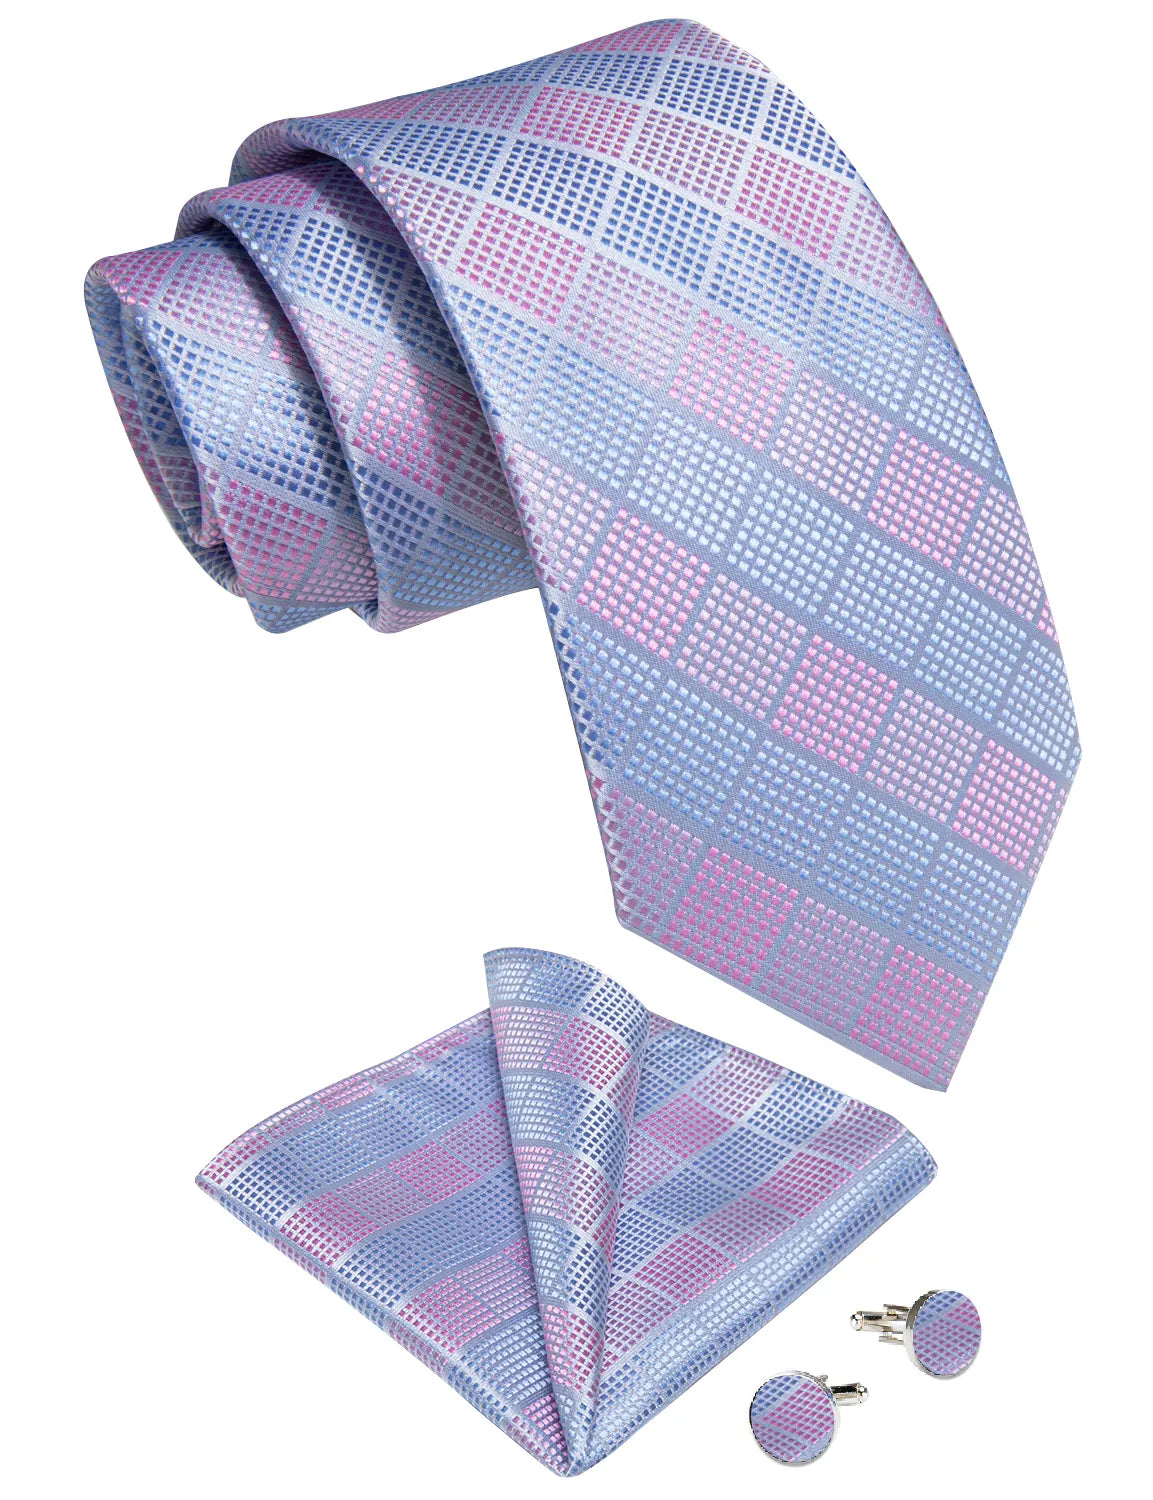 Fashion Blue Pink Check Plaid Ties for Men 8cm Wedding Party Accessories Necktie Set